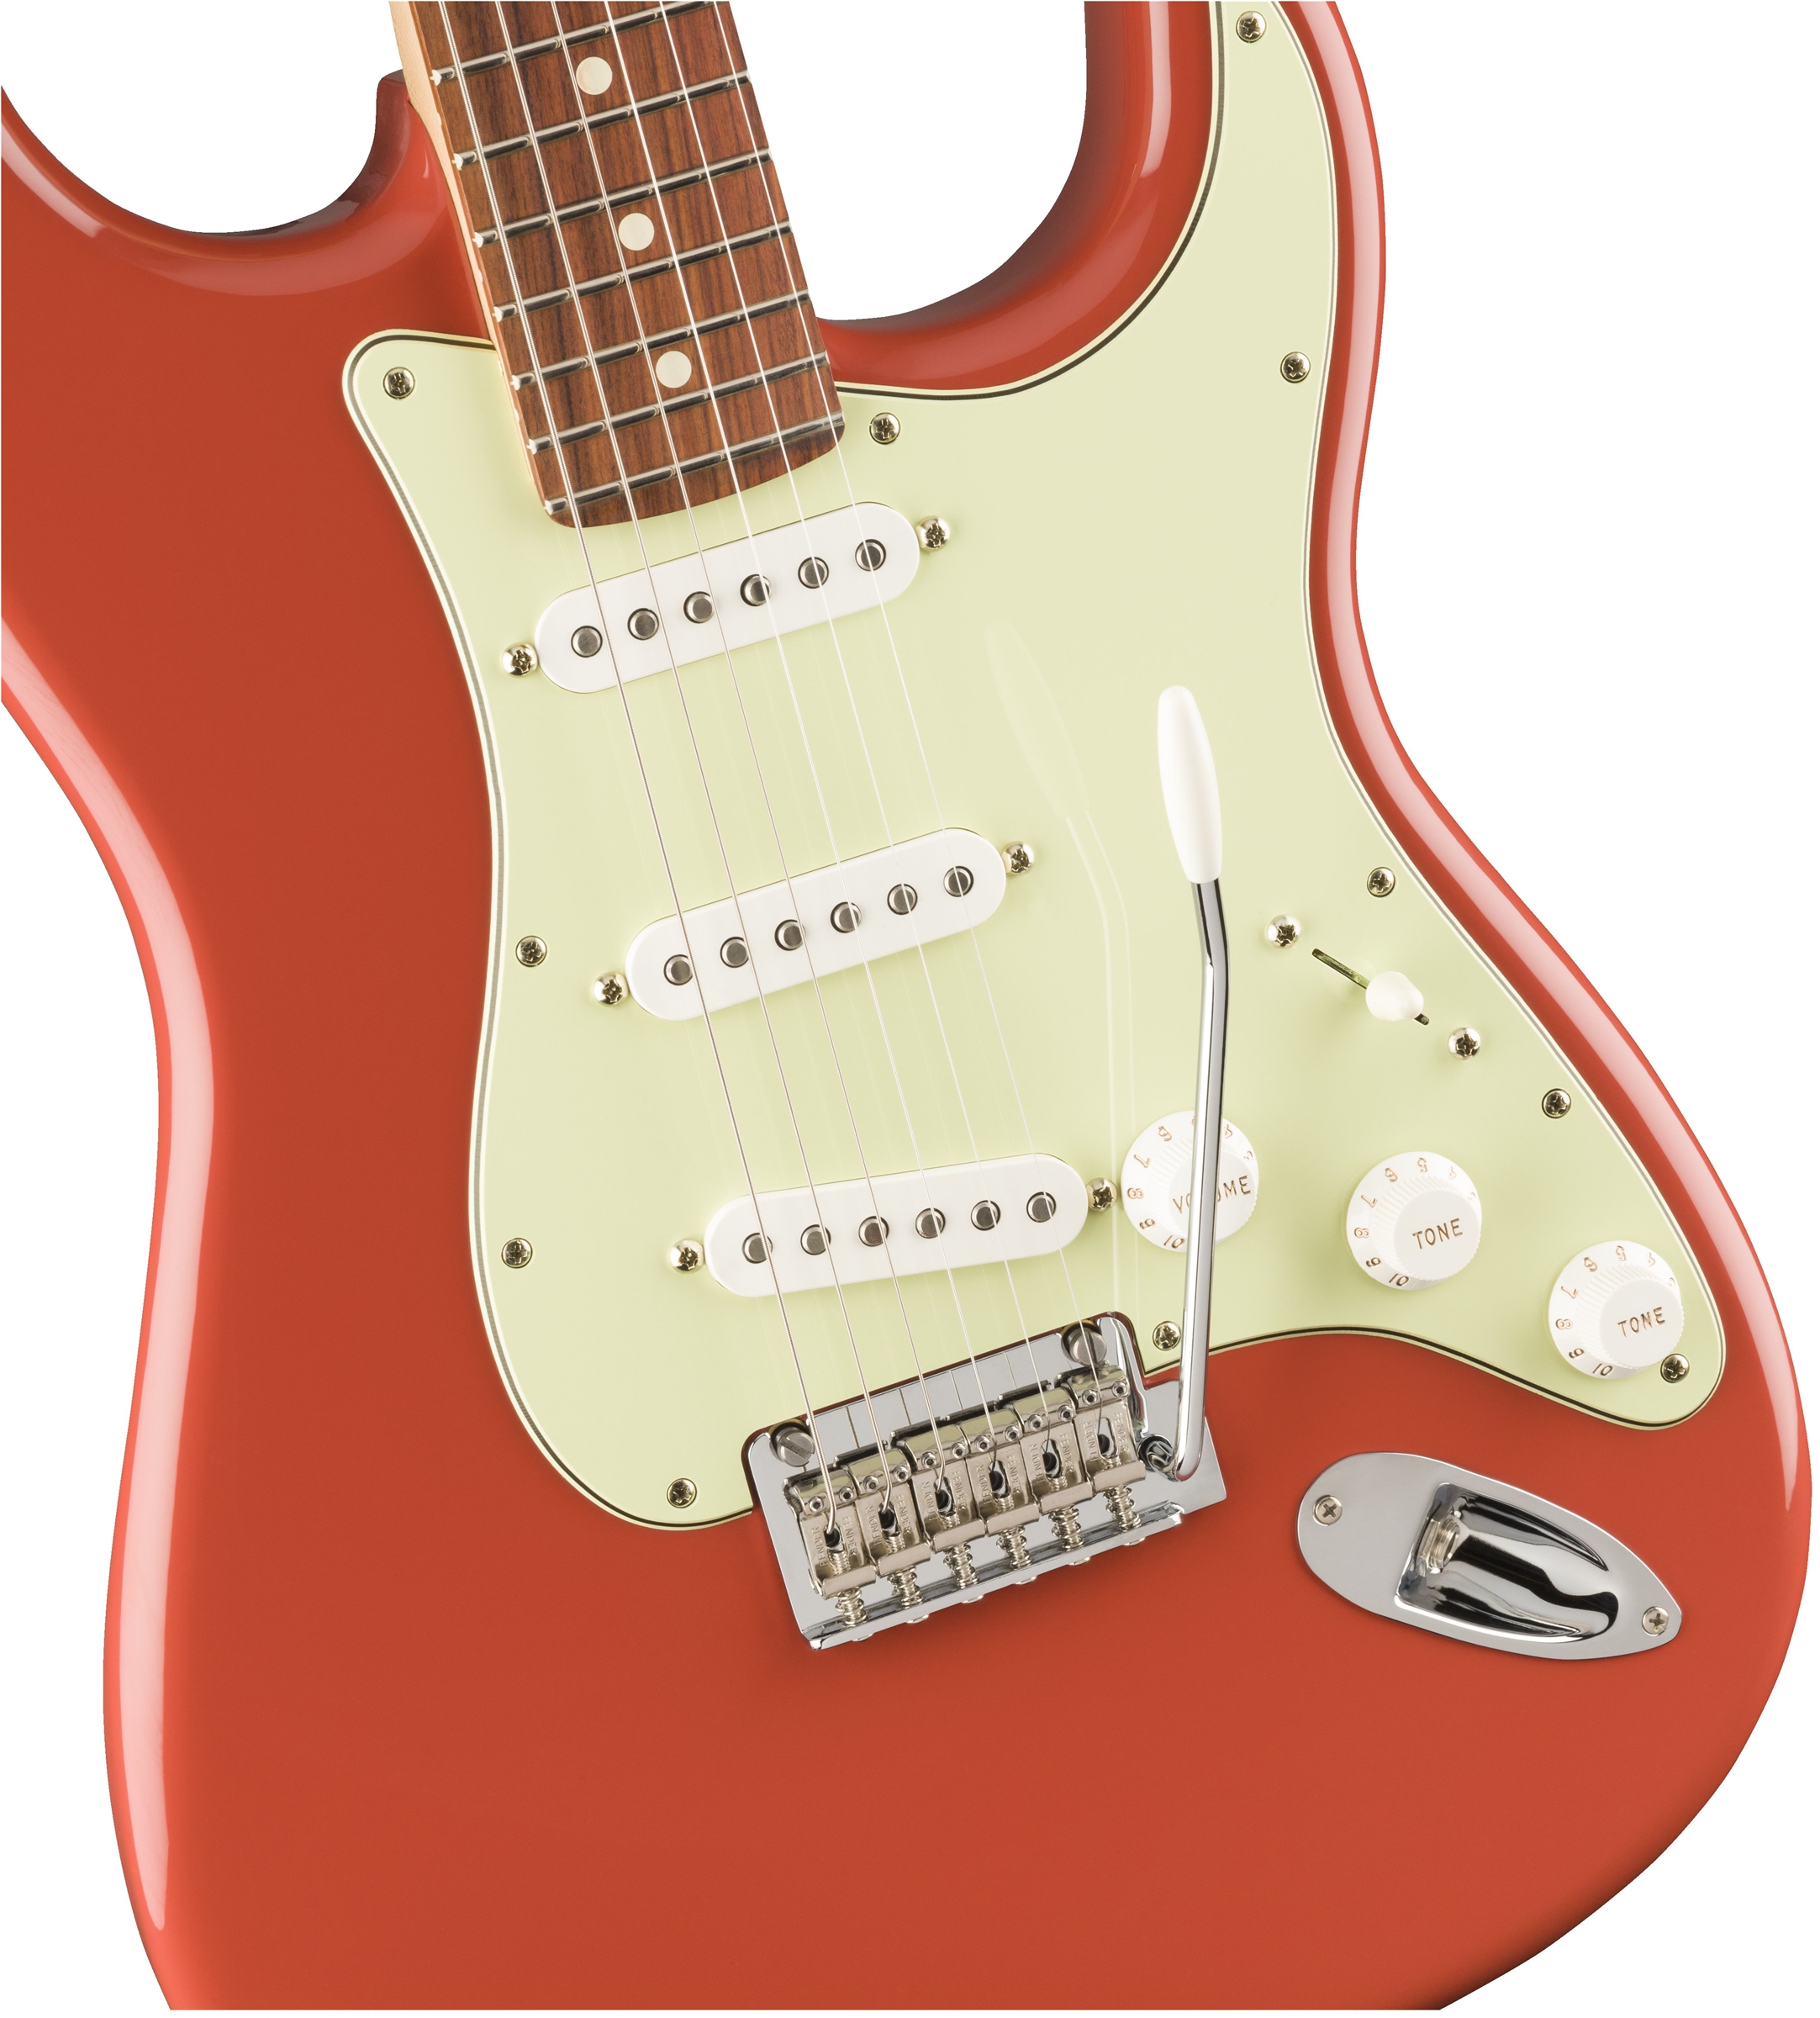 Fender Strat Player Ltd Mex 3s Trem Pf - Fiesta Red - Str shape electric guitar - Variation 2